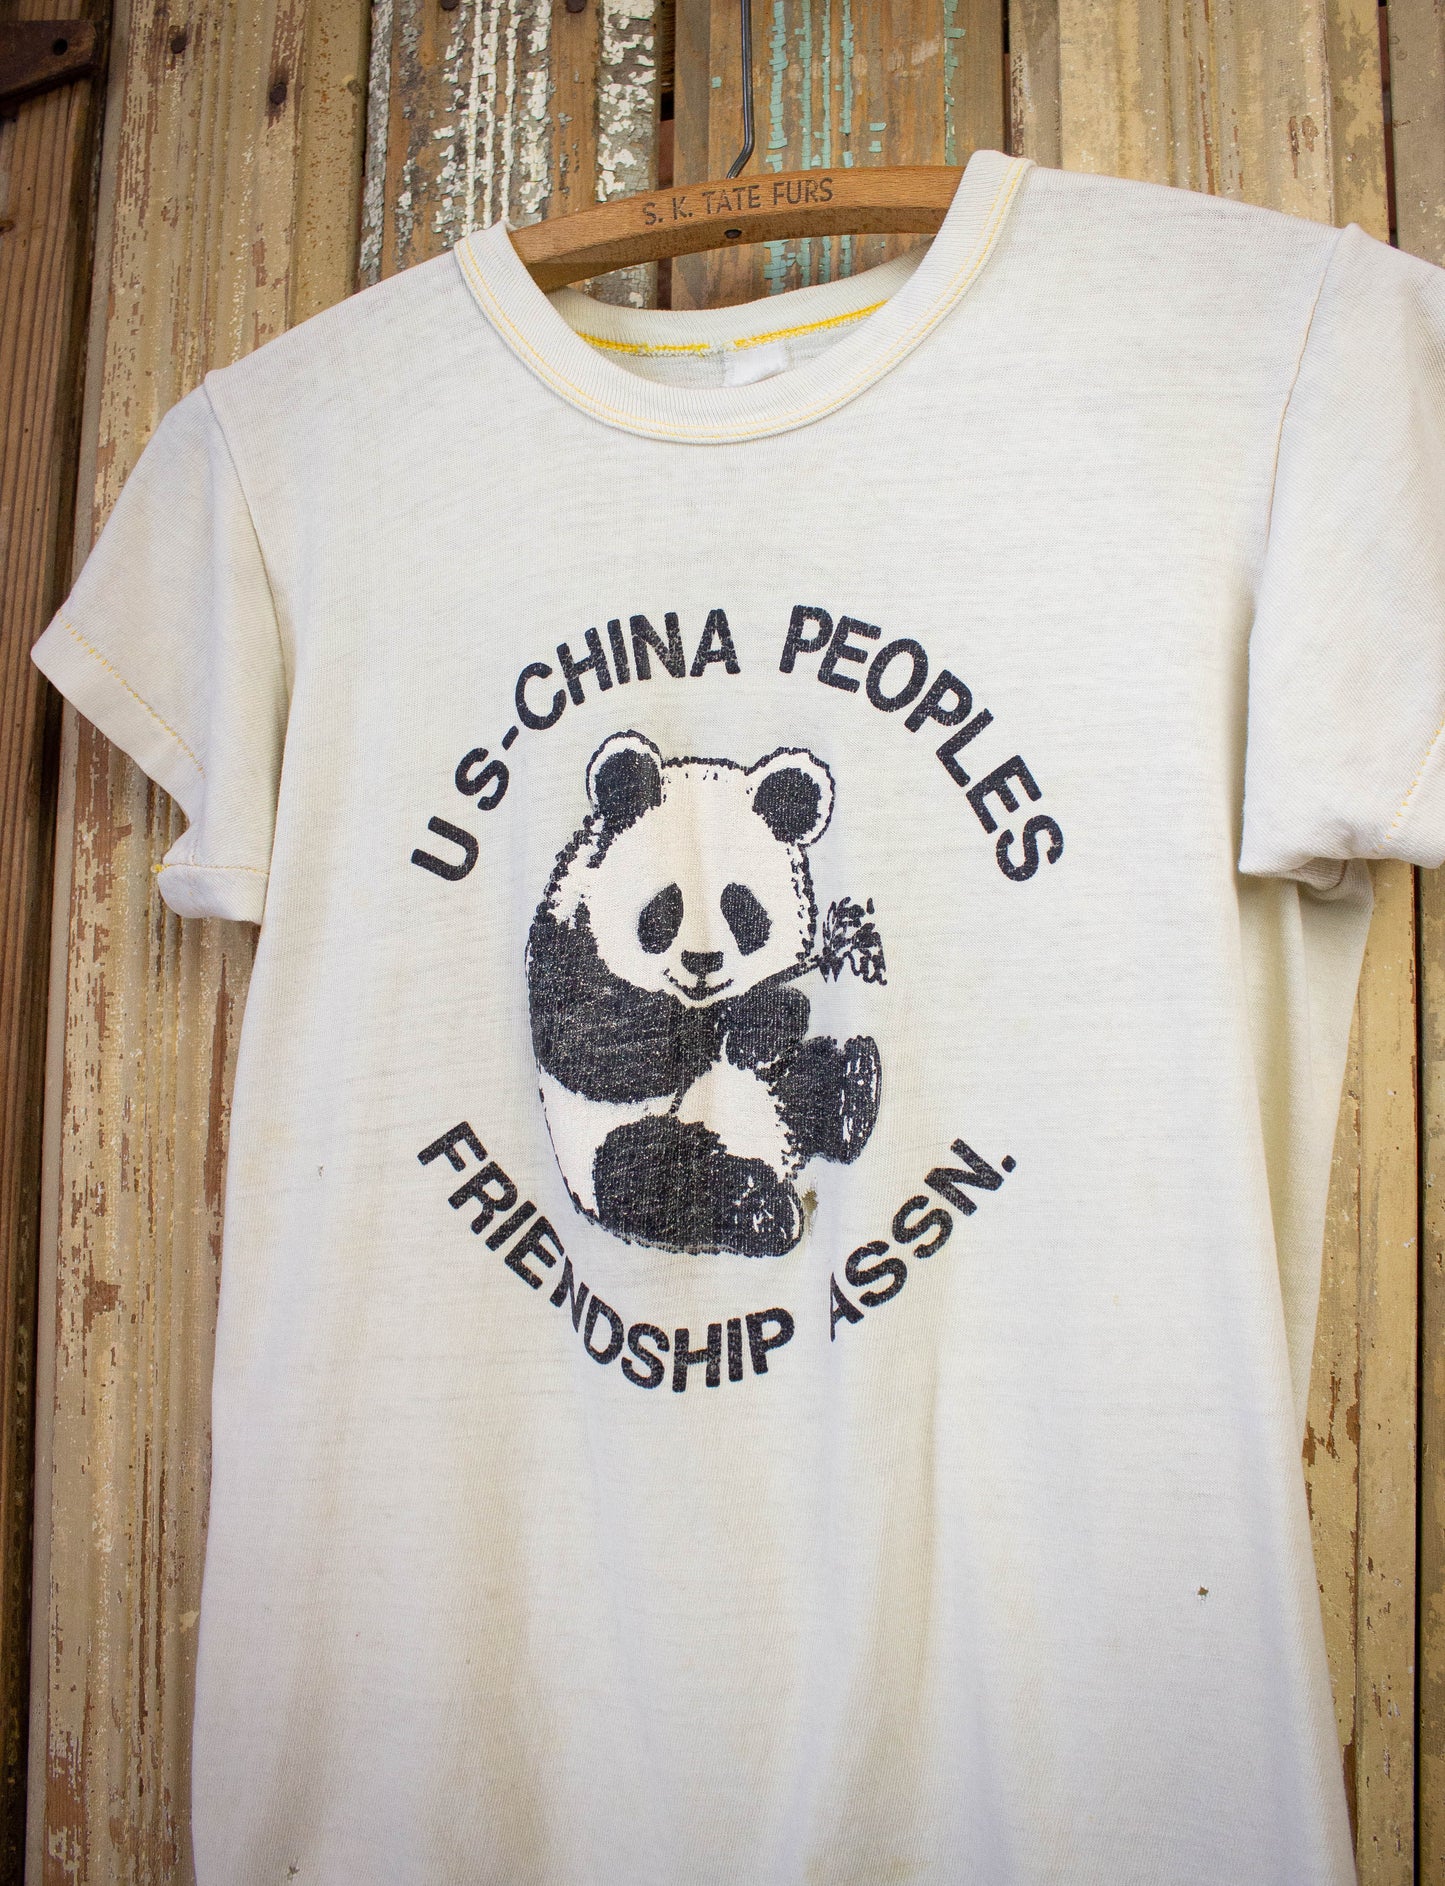 Vintage U.S. China Peoples Friendship Association Graphic T-Shirt 1970s XS